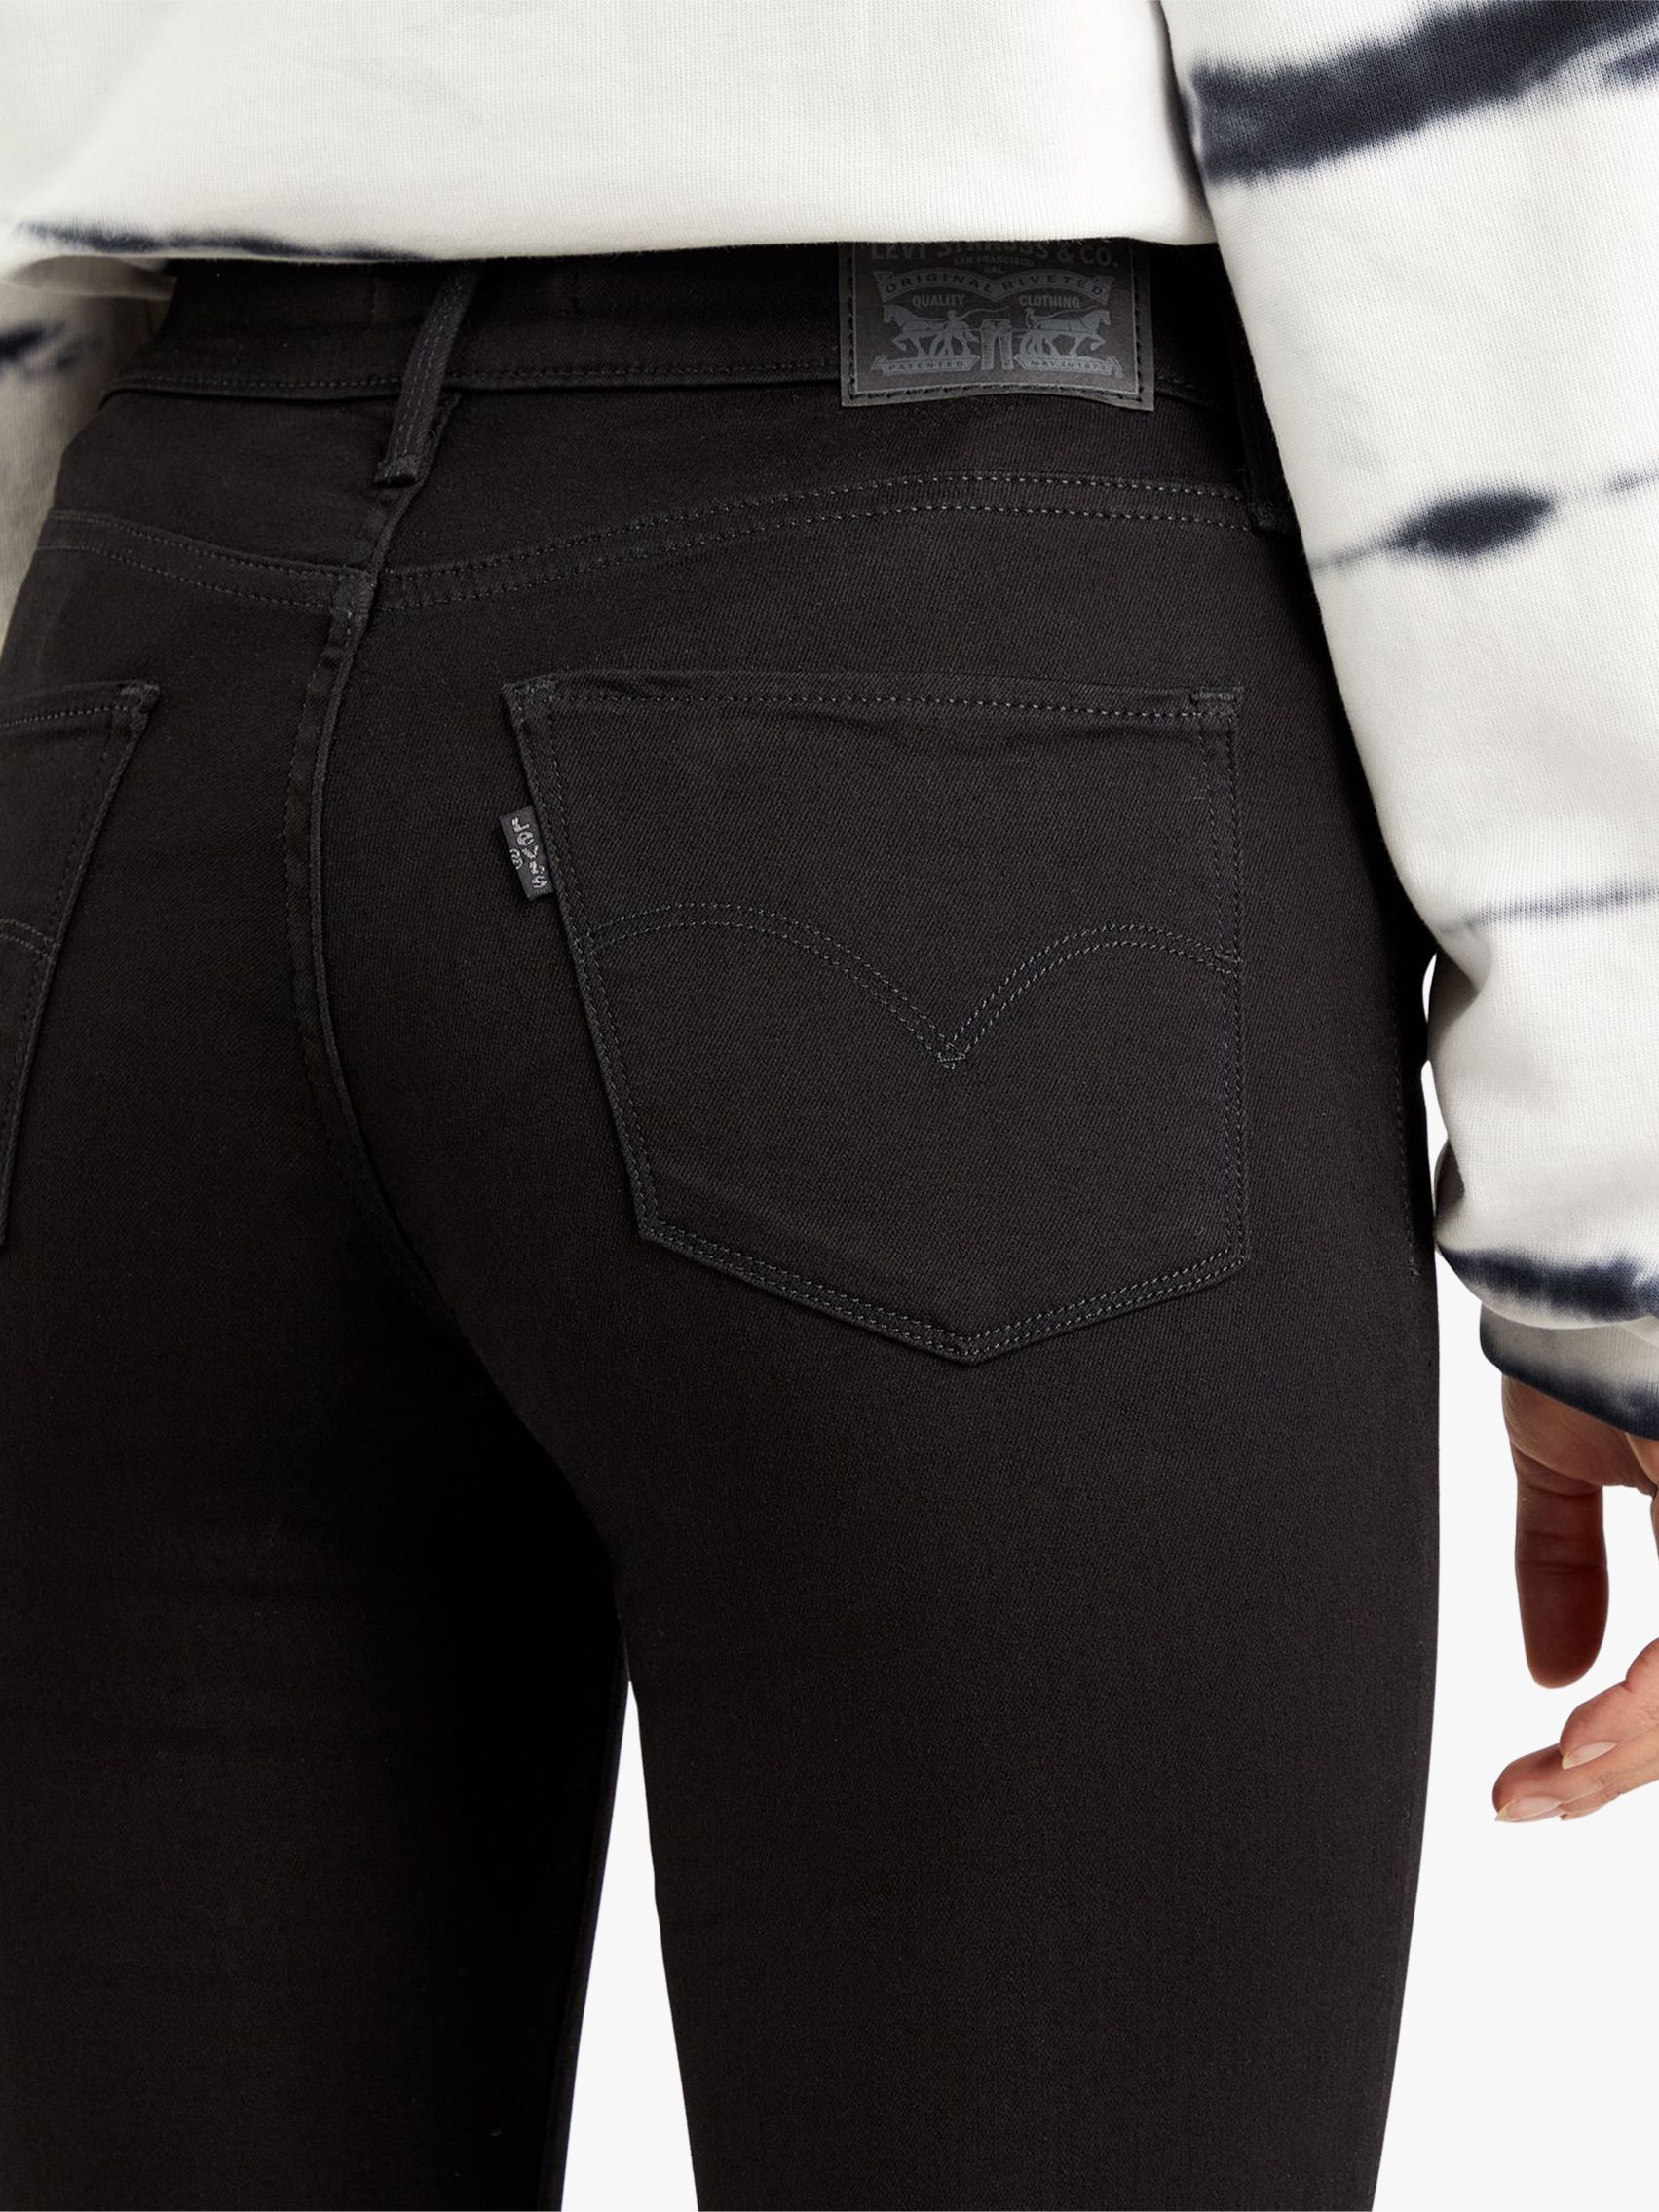 Levi's 311 Shaping Skinny Jeans, Soft Black at John Lewis & Partners